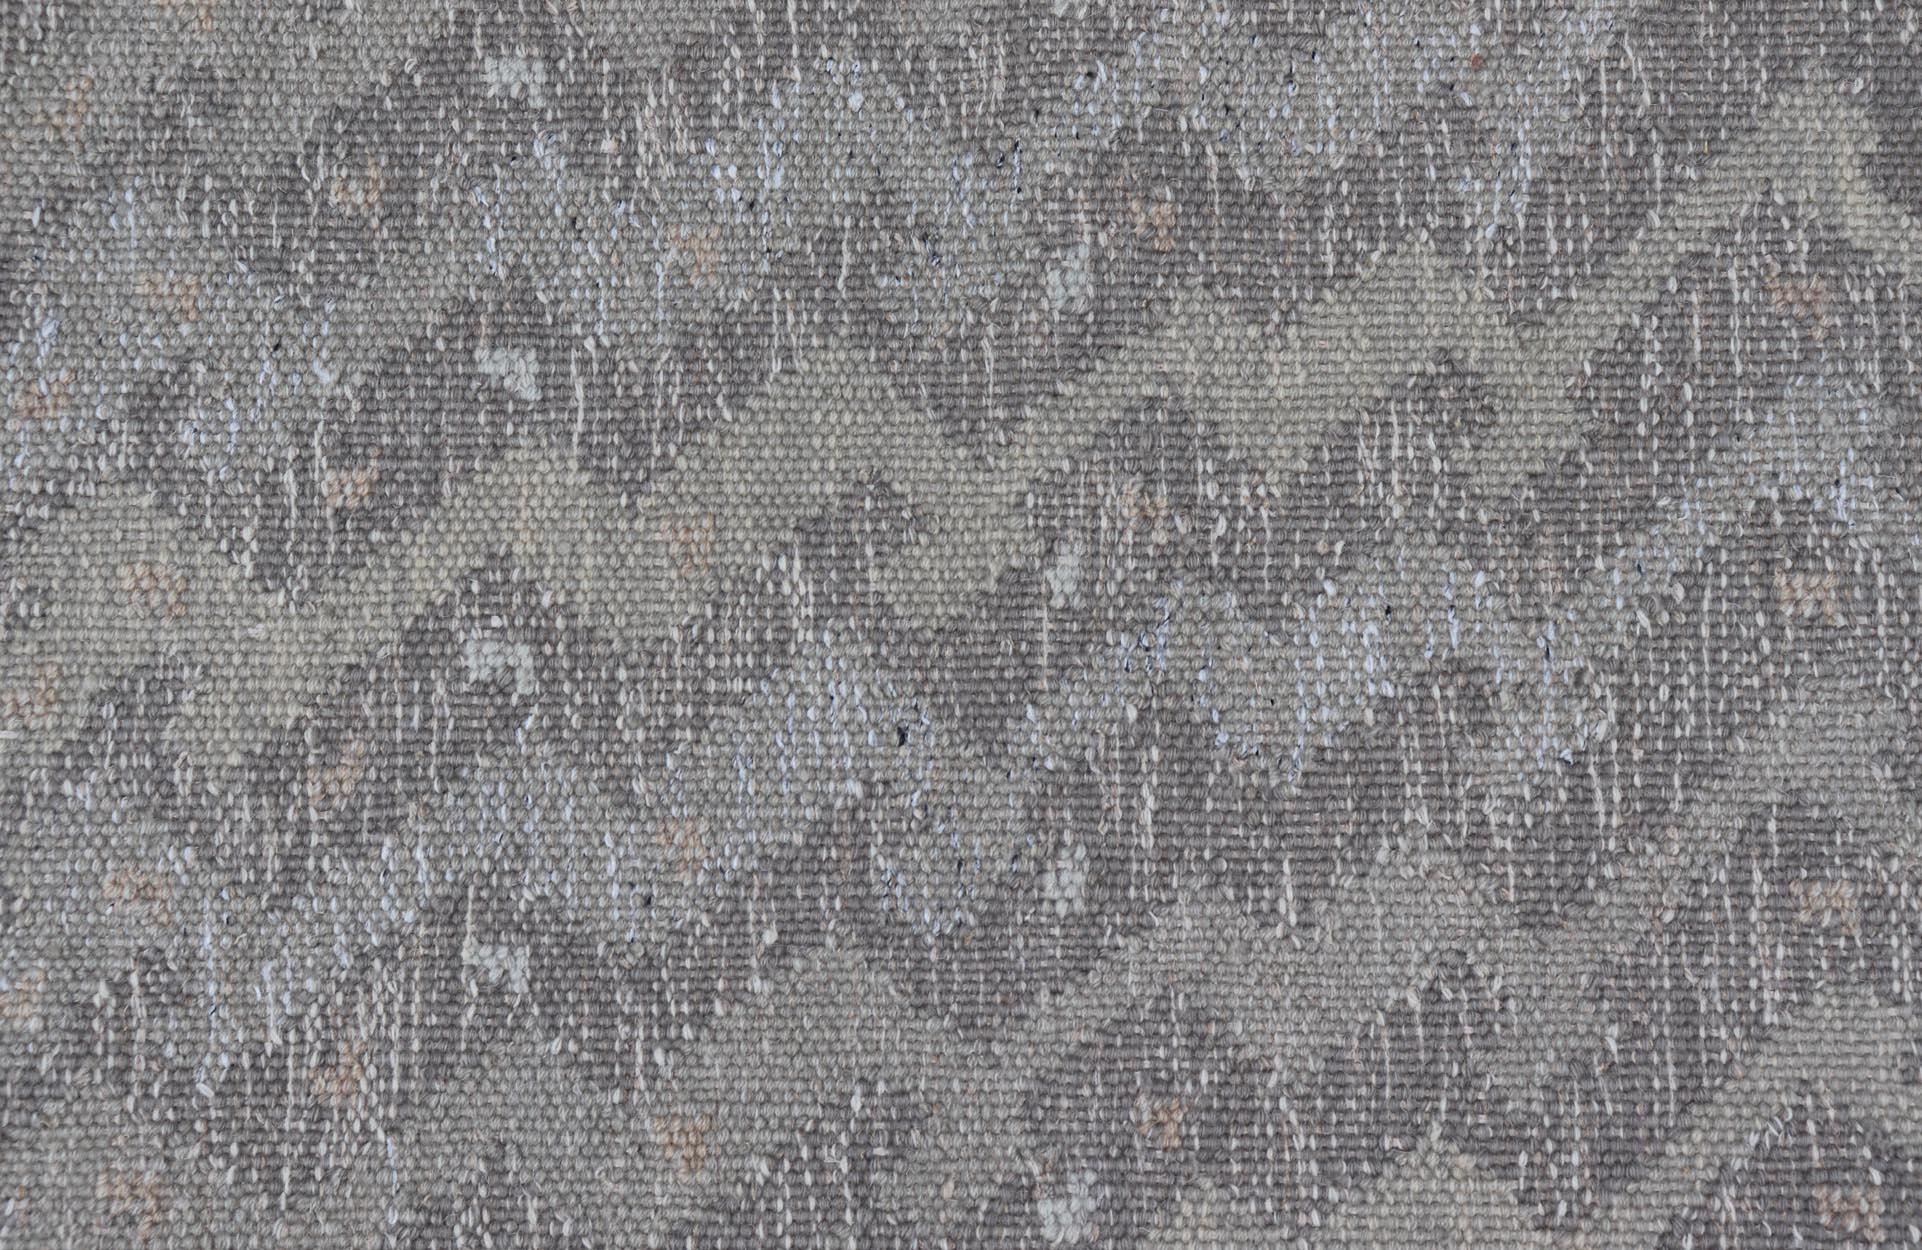 Scandinavian Modern Geometric Modern Scandinavian Flat-Weave Design Rug in Gray And Light Gray Tones For Sale